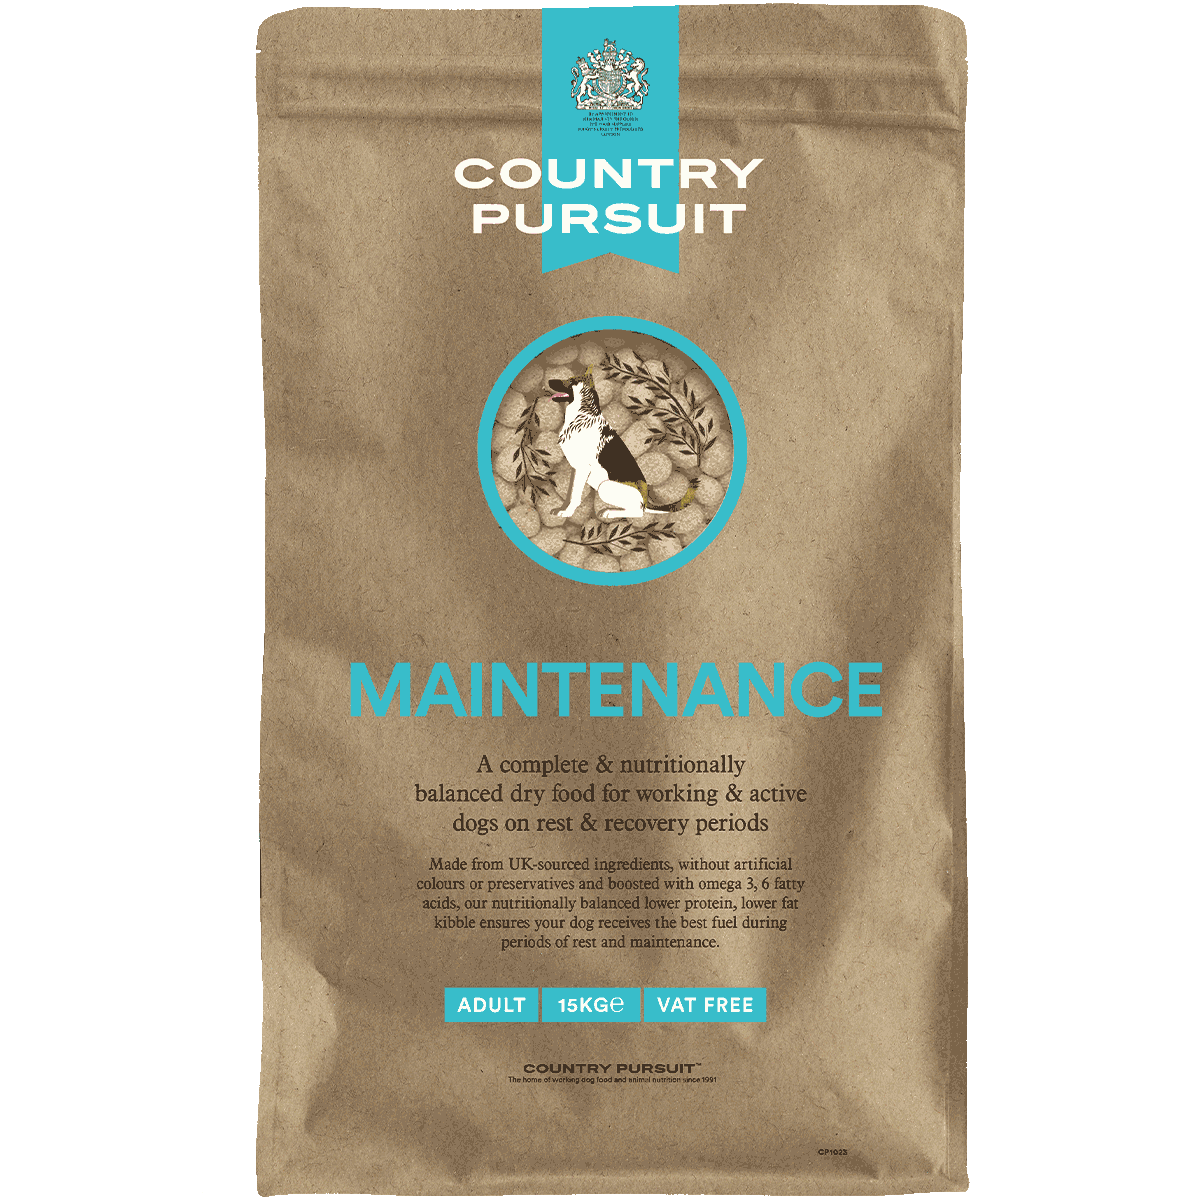 Country Pursuit Original Maintenance dog food 15kg pack shot